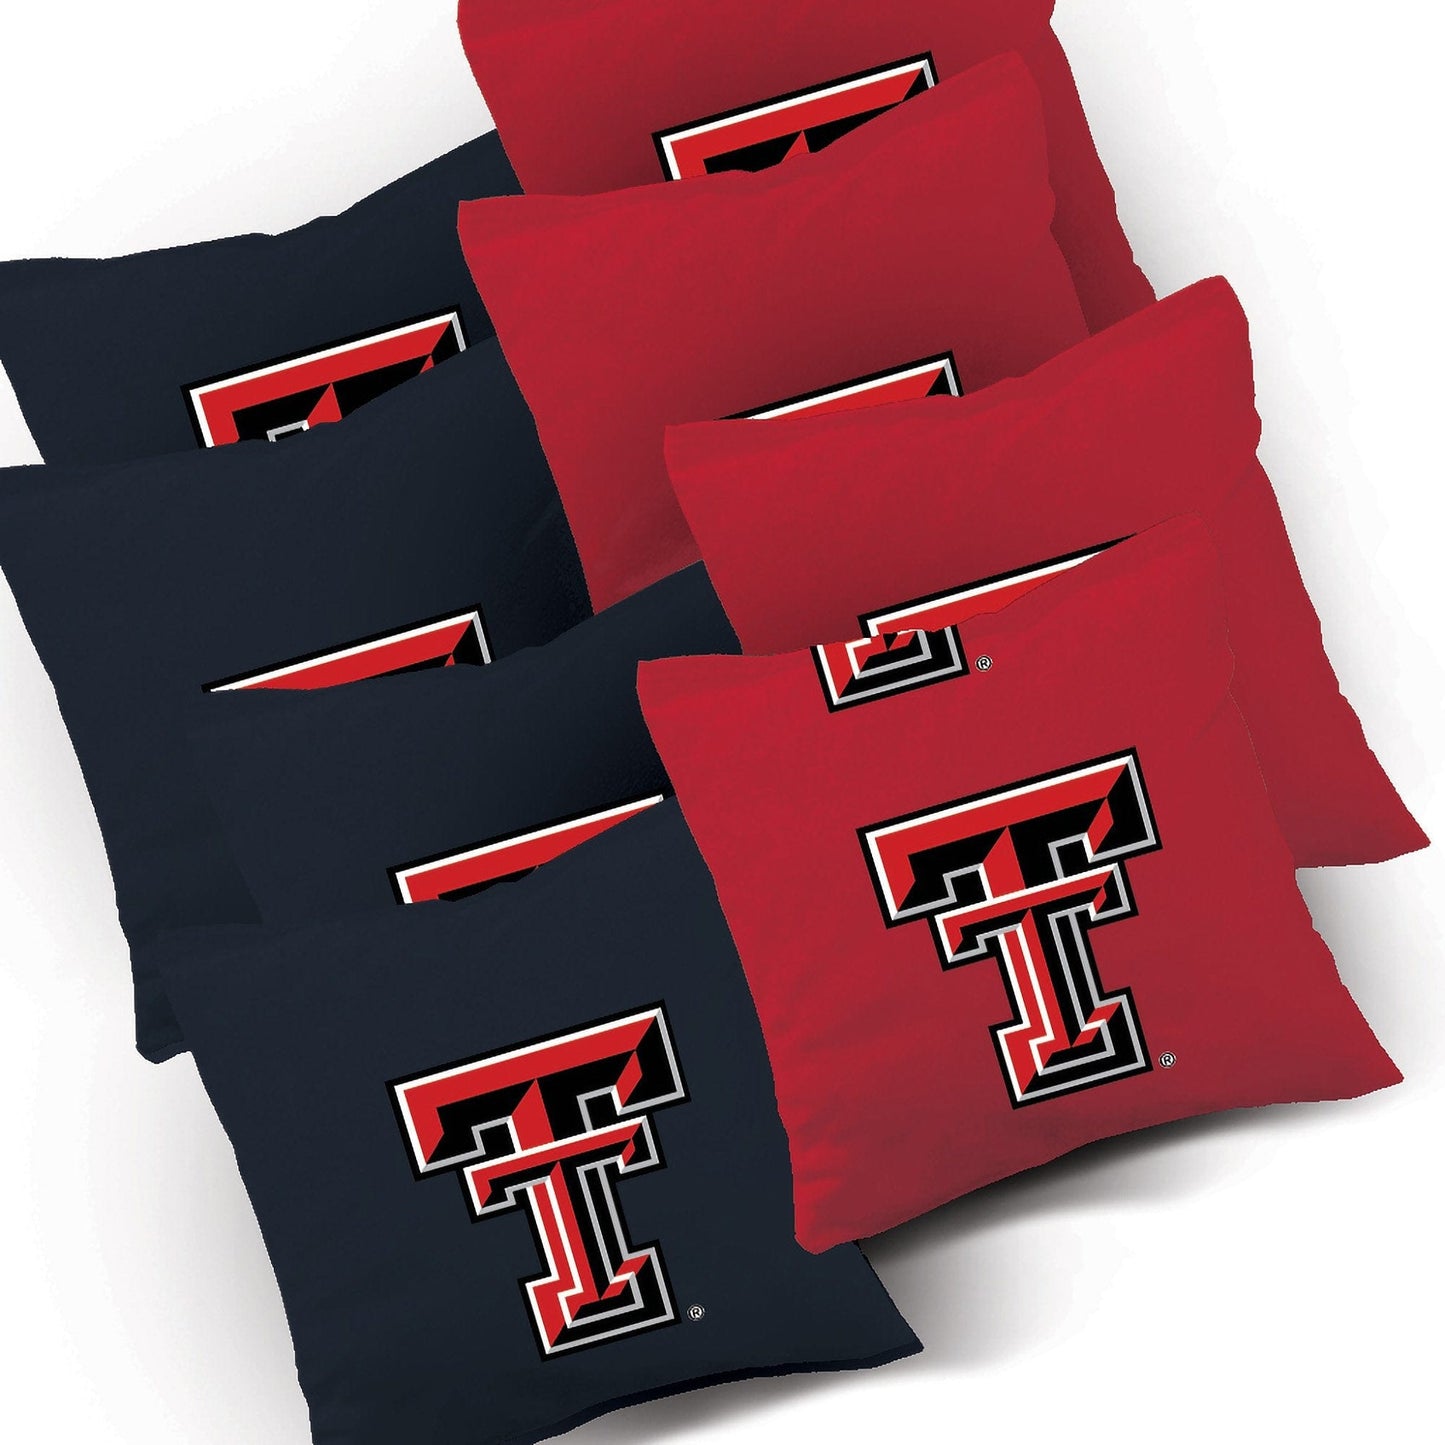 Texas Tech Red Raiders Pyramid team logo bags